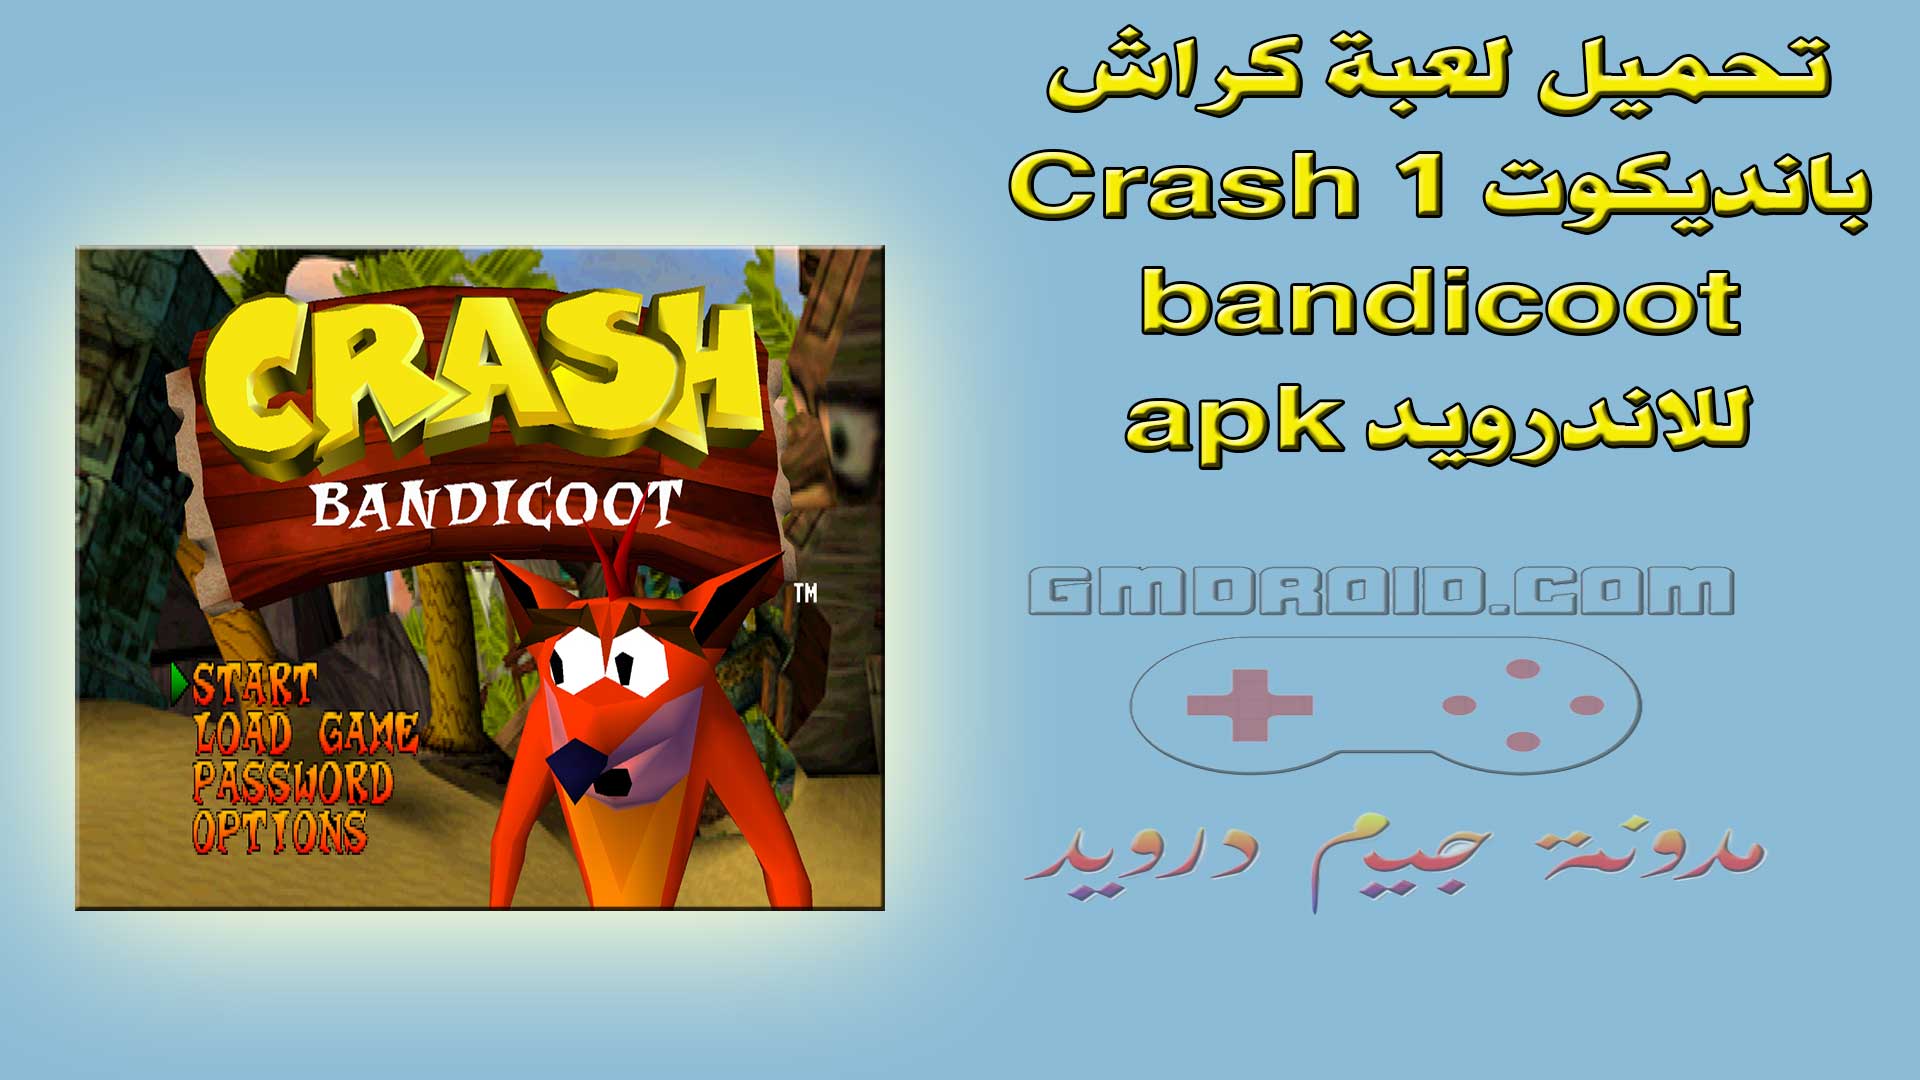 تحميل لعبة كراش بانديكوت 1 Crash bandicoot للاندرويد apk